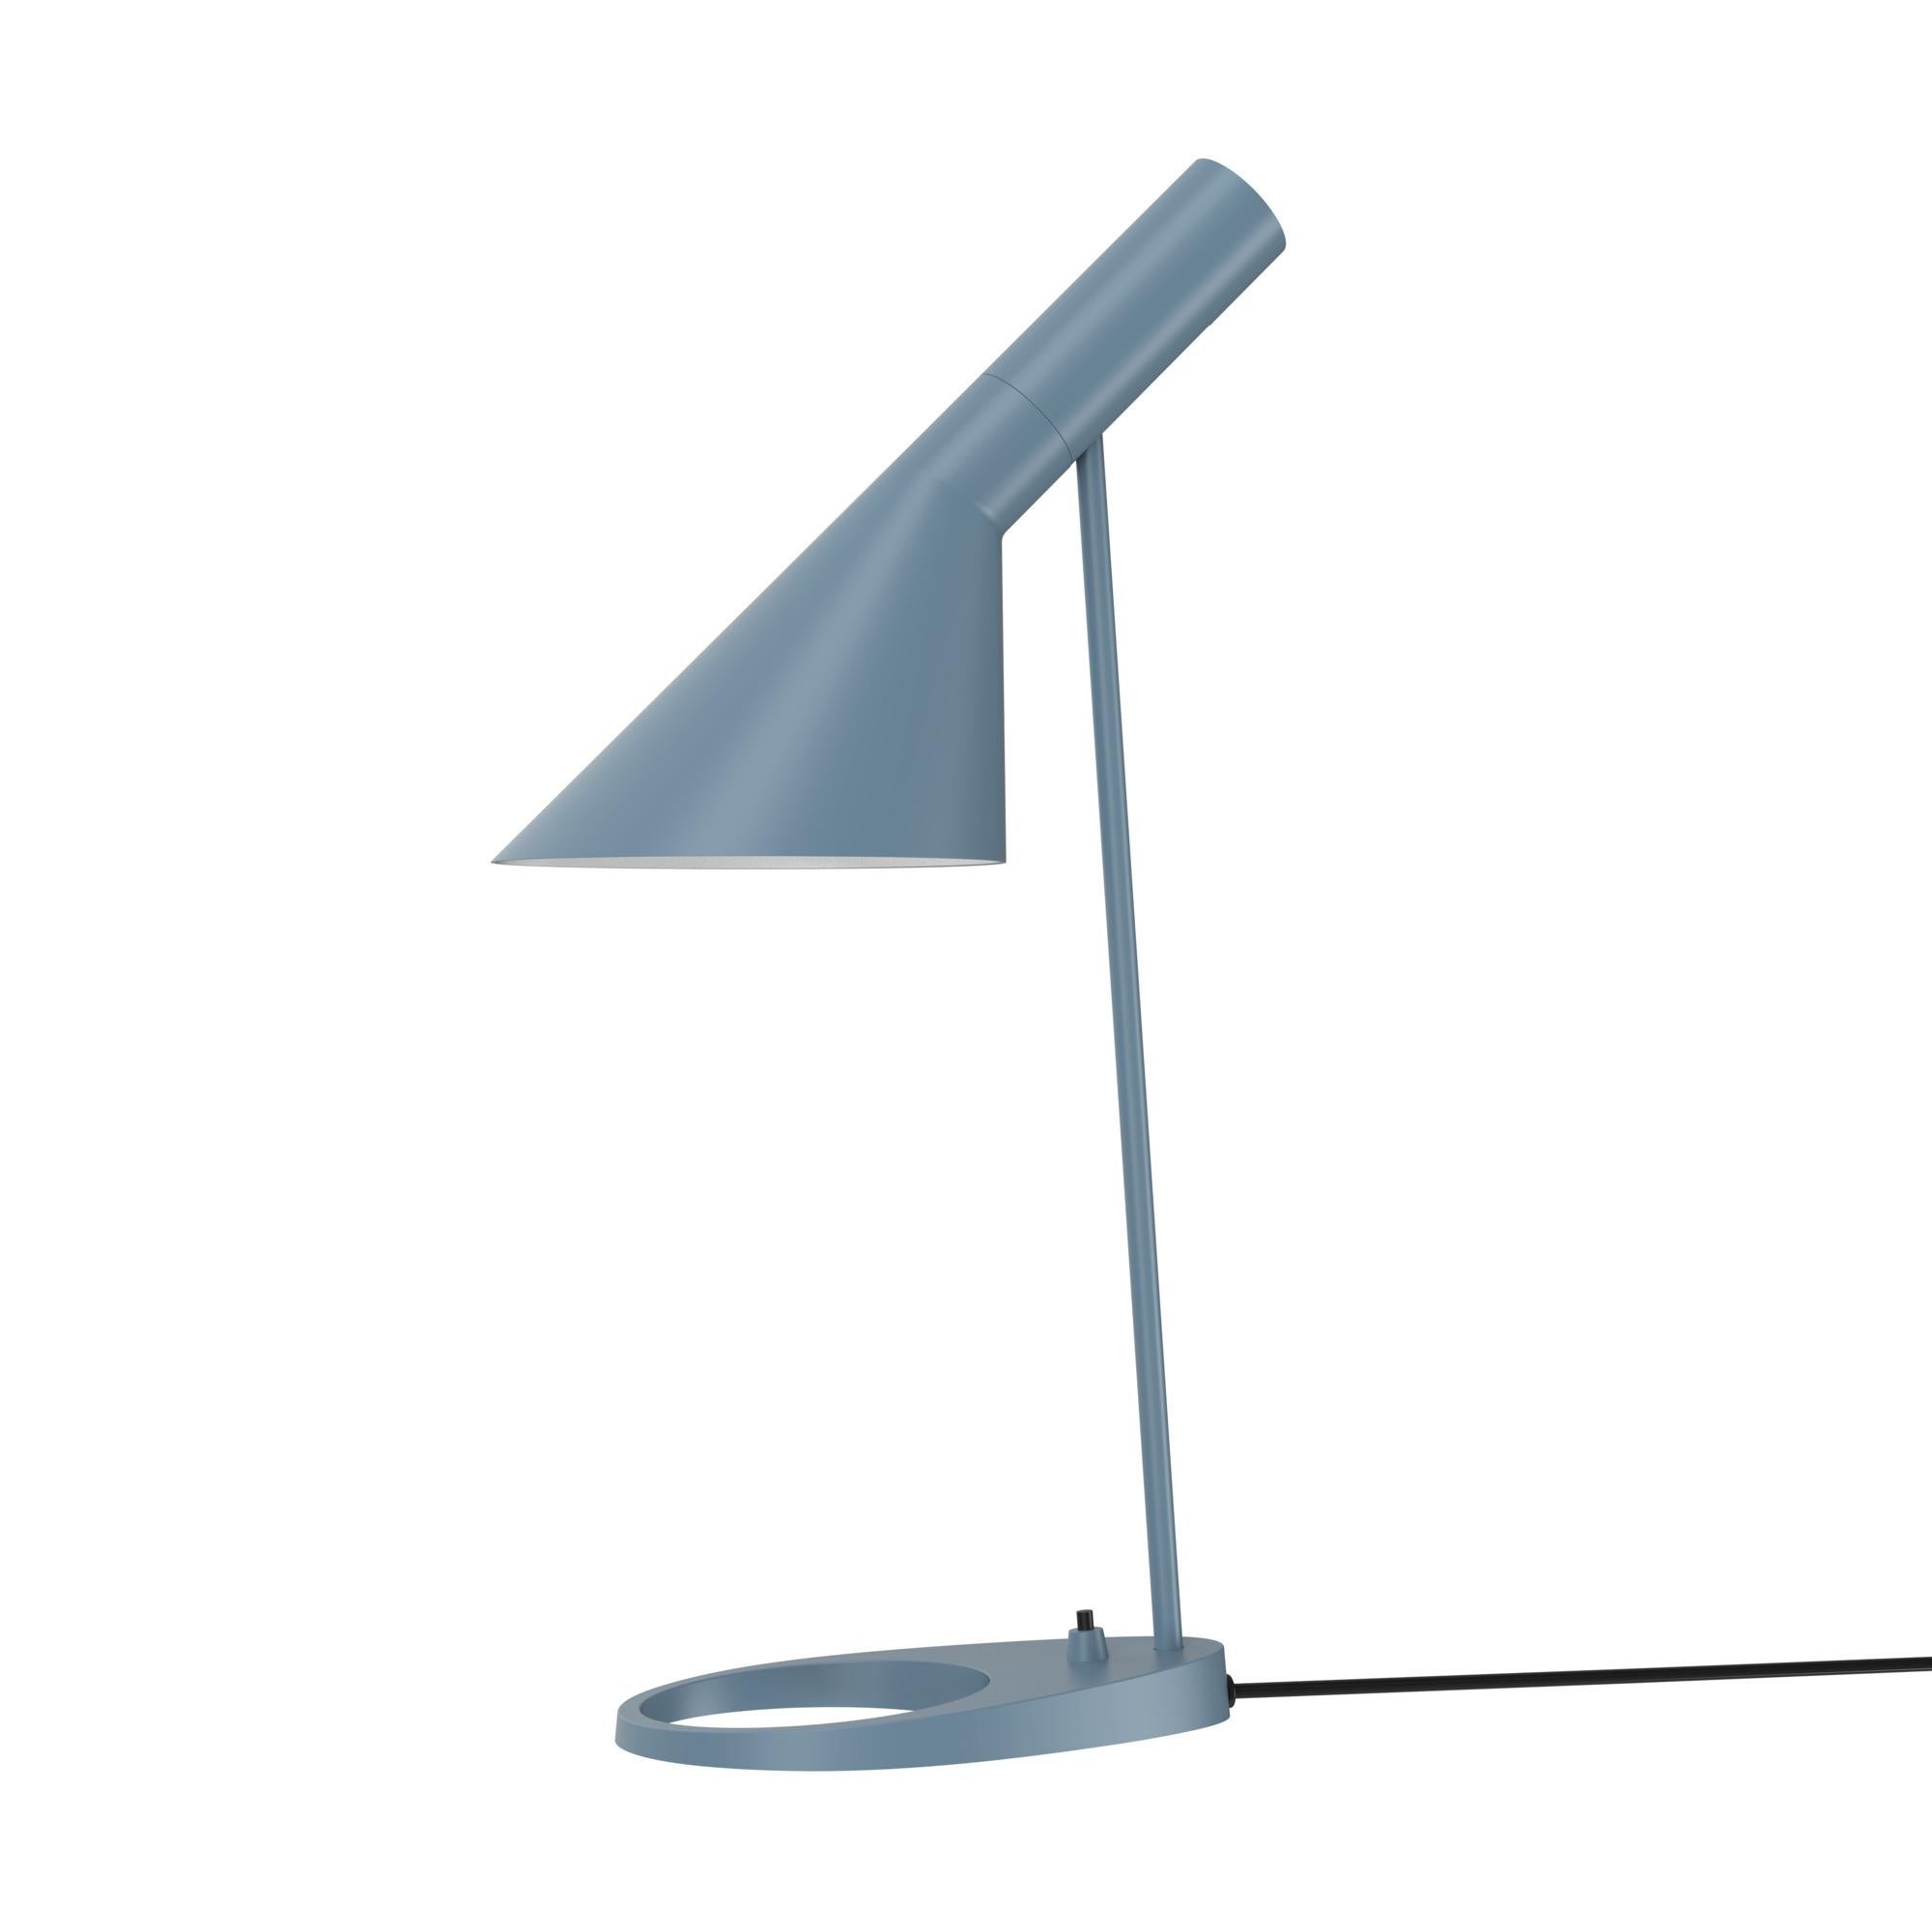 Arne Jacobsen AJ Table Lamp in Stainless Steel for Louis Poulsen For Sale 2